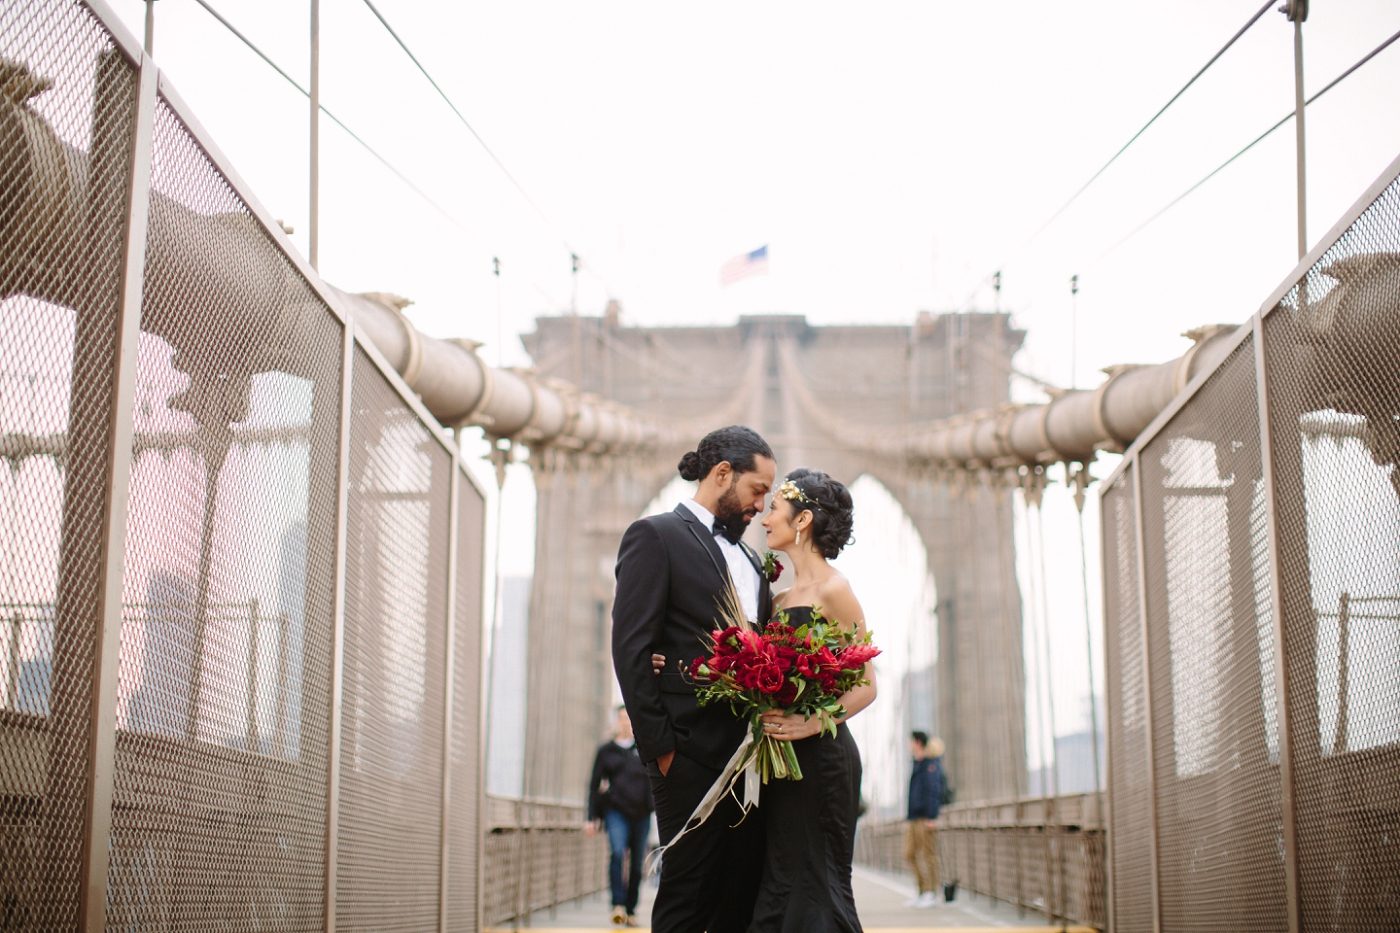 Brooklyn bridge New york city wedding photography by Samantha Clarke